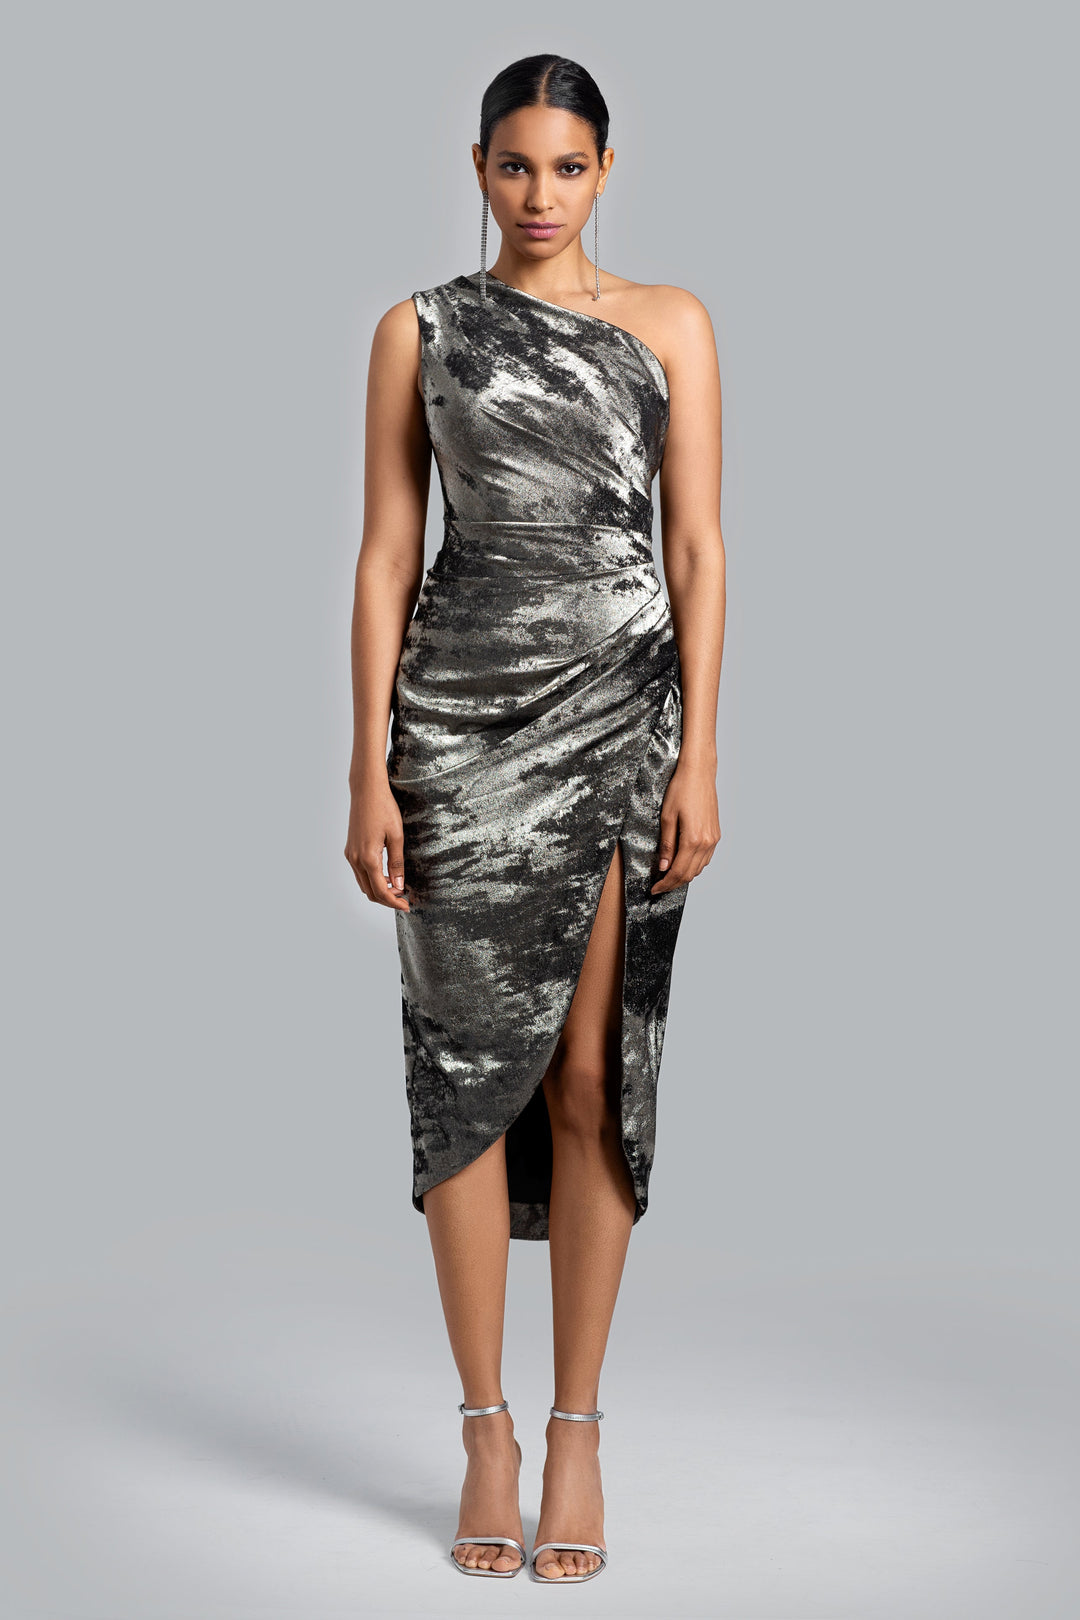 GHRAIL "Lenox" Metallic Crepe Dress